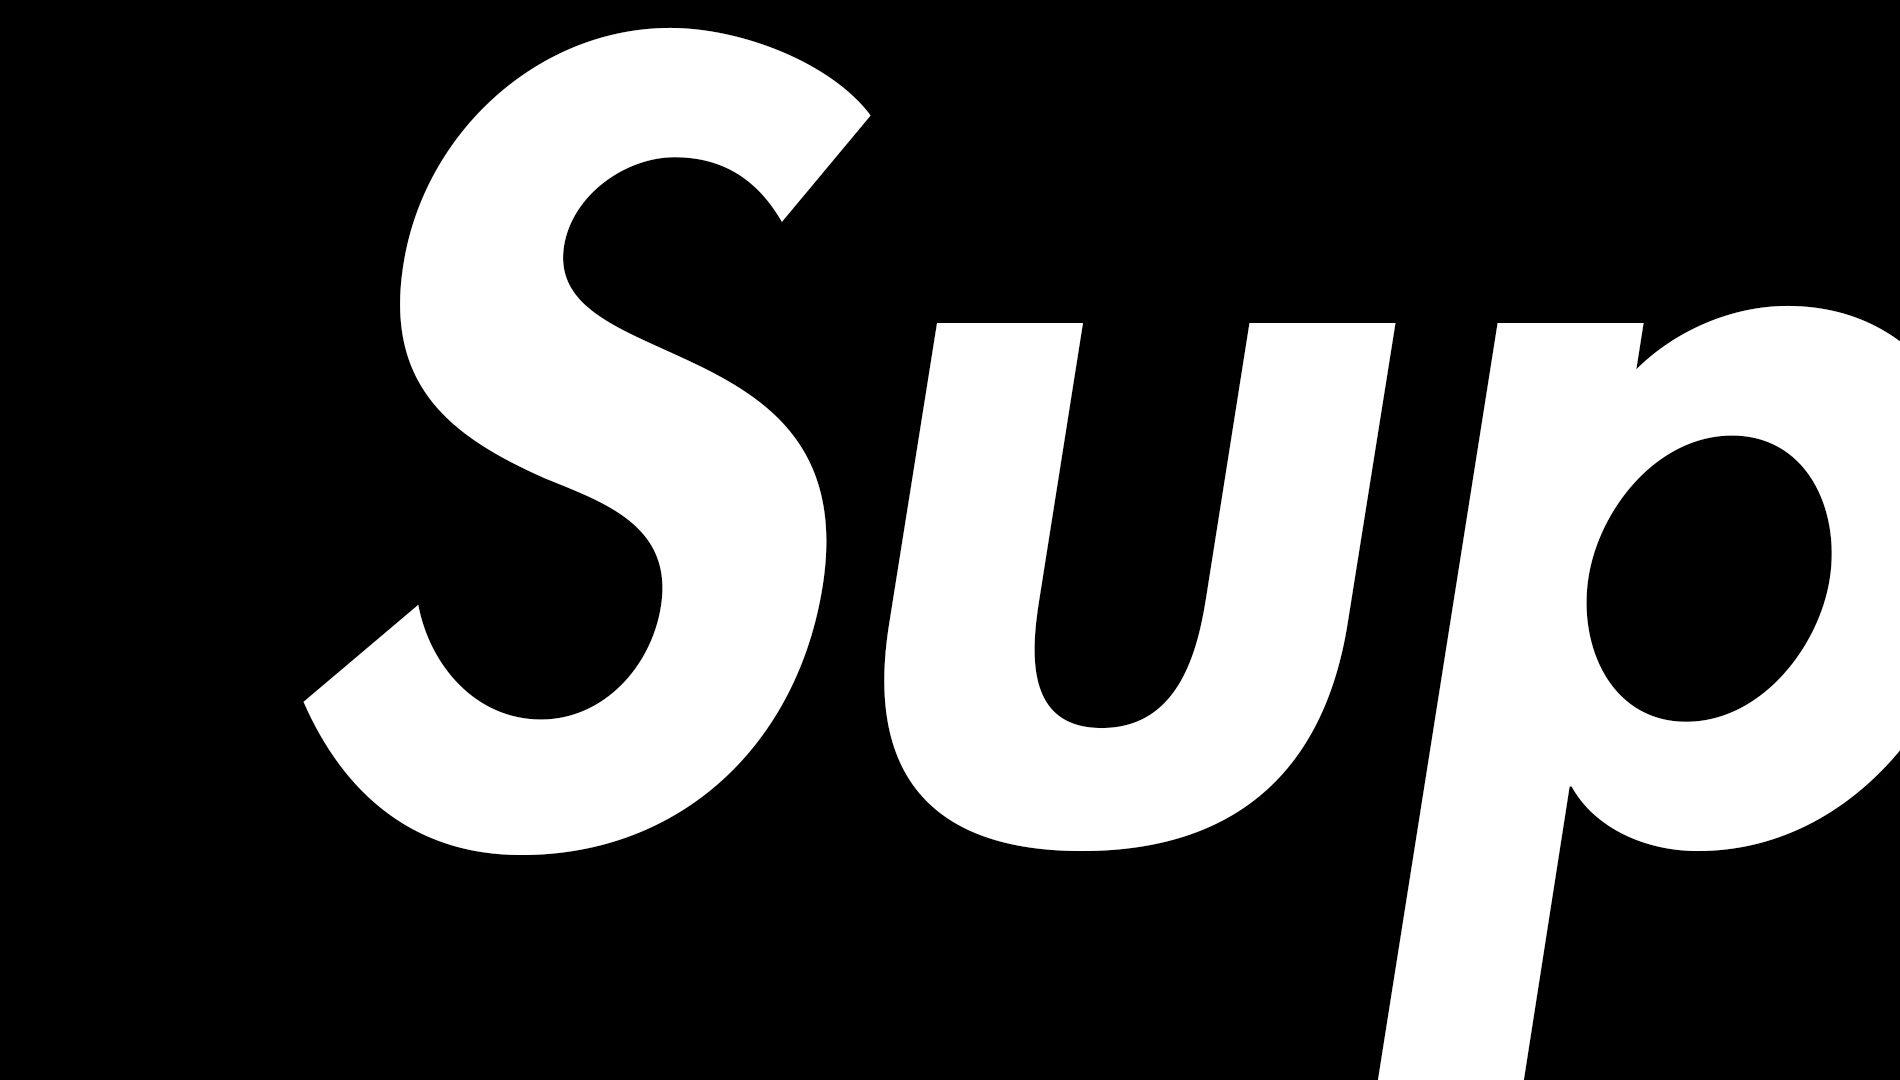 White Supreme Logo - Black And White Supreme Clothing Brand Logo Wallpaper | PaperPull